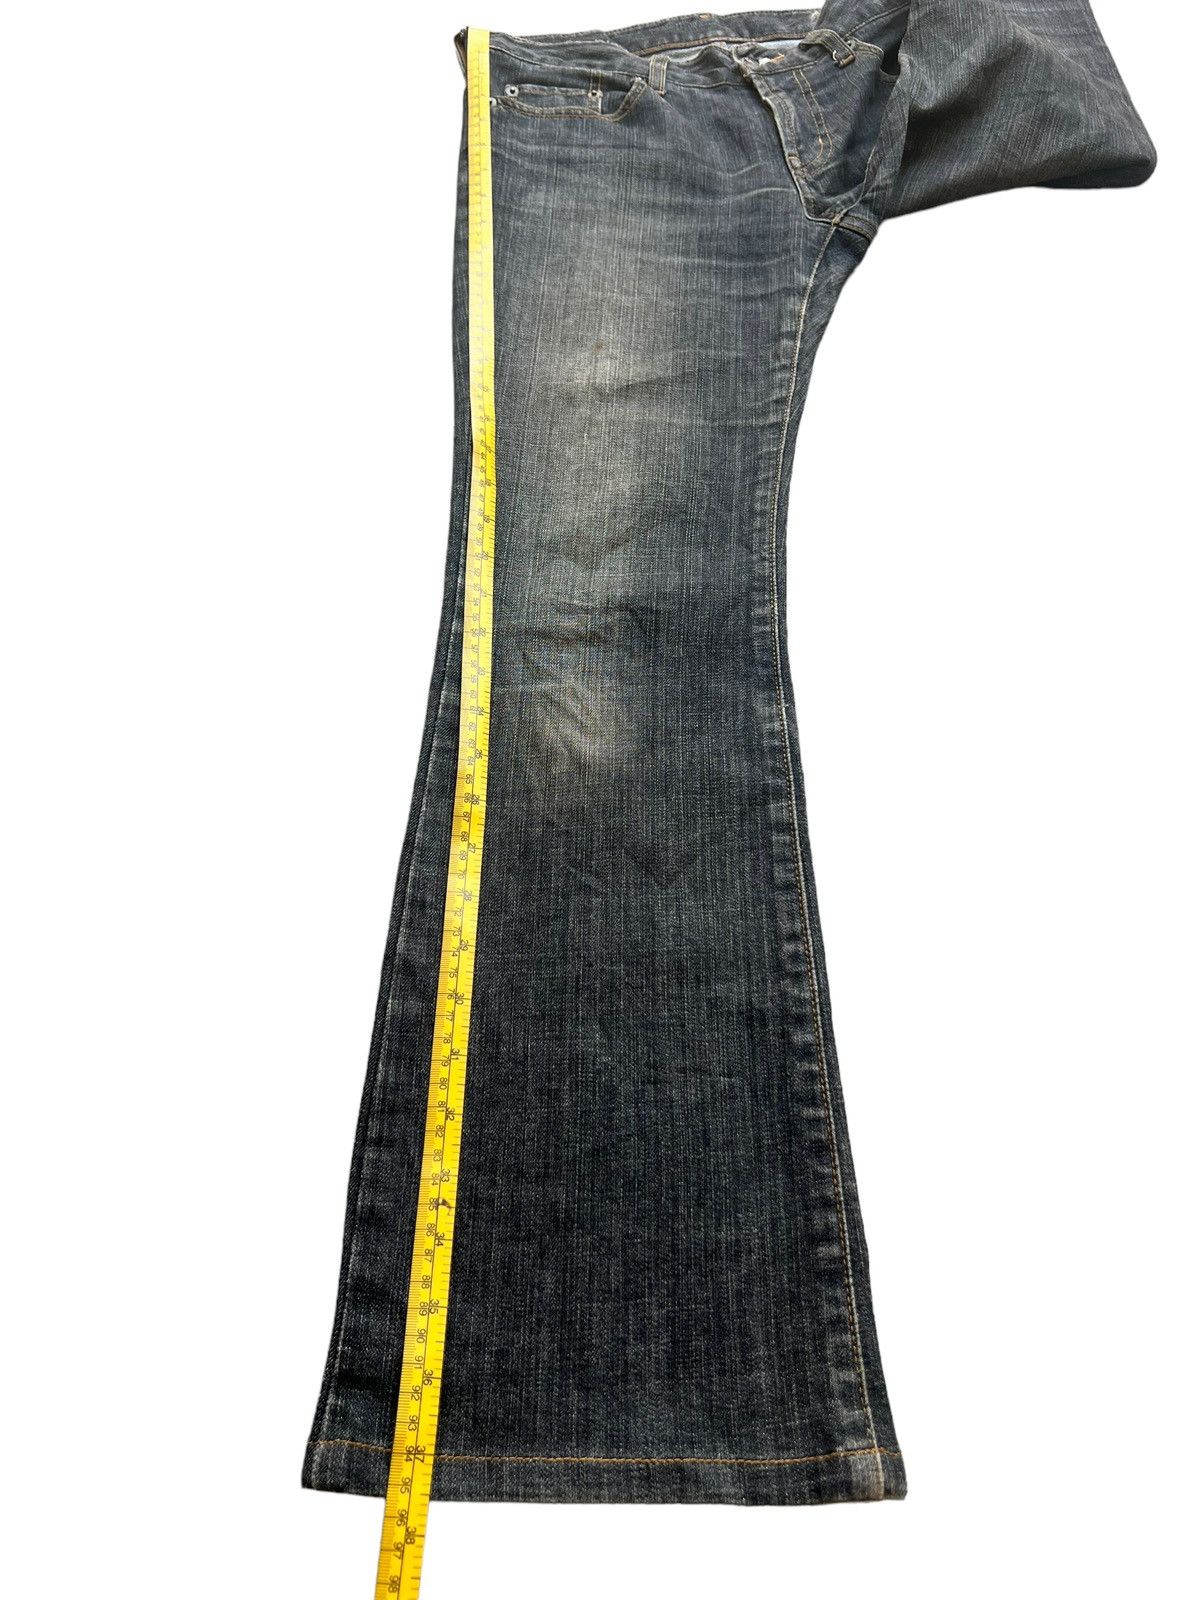 Uniqlo Black Low Rise Bootcut Flare Denim Jeans 30x29 - 11